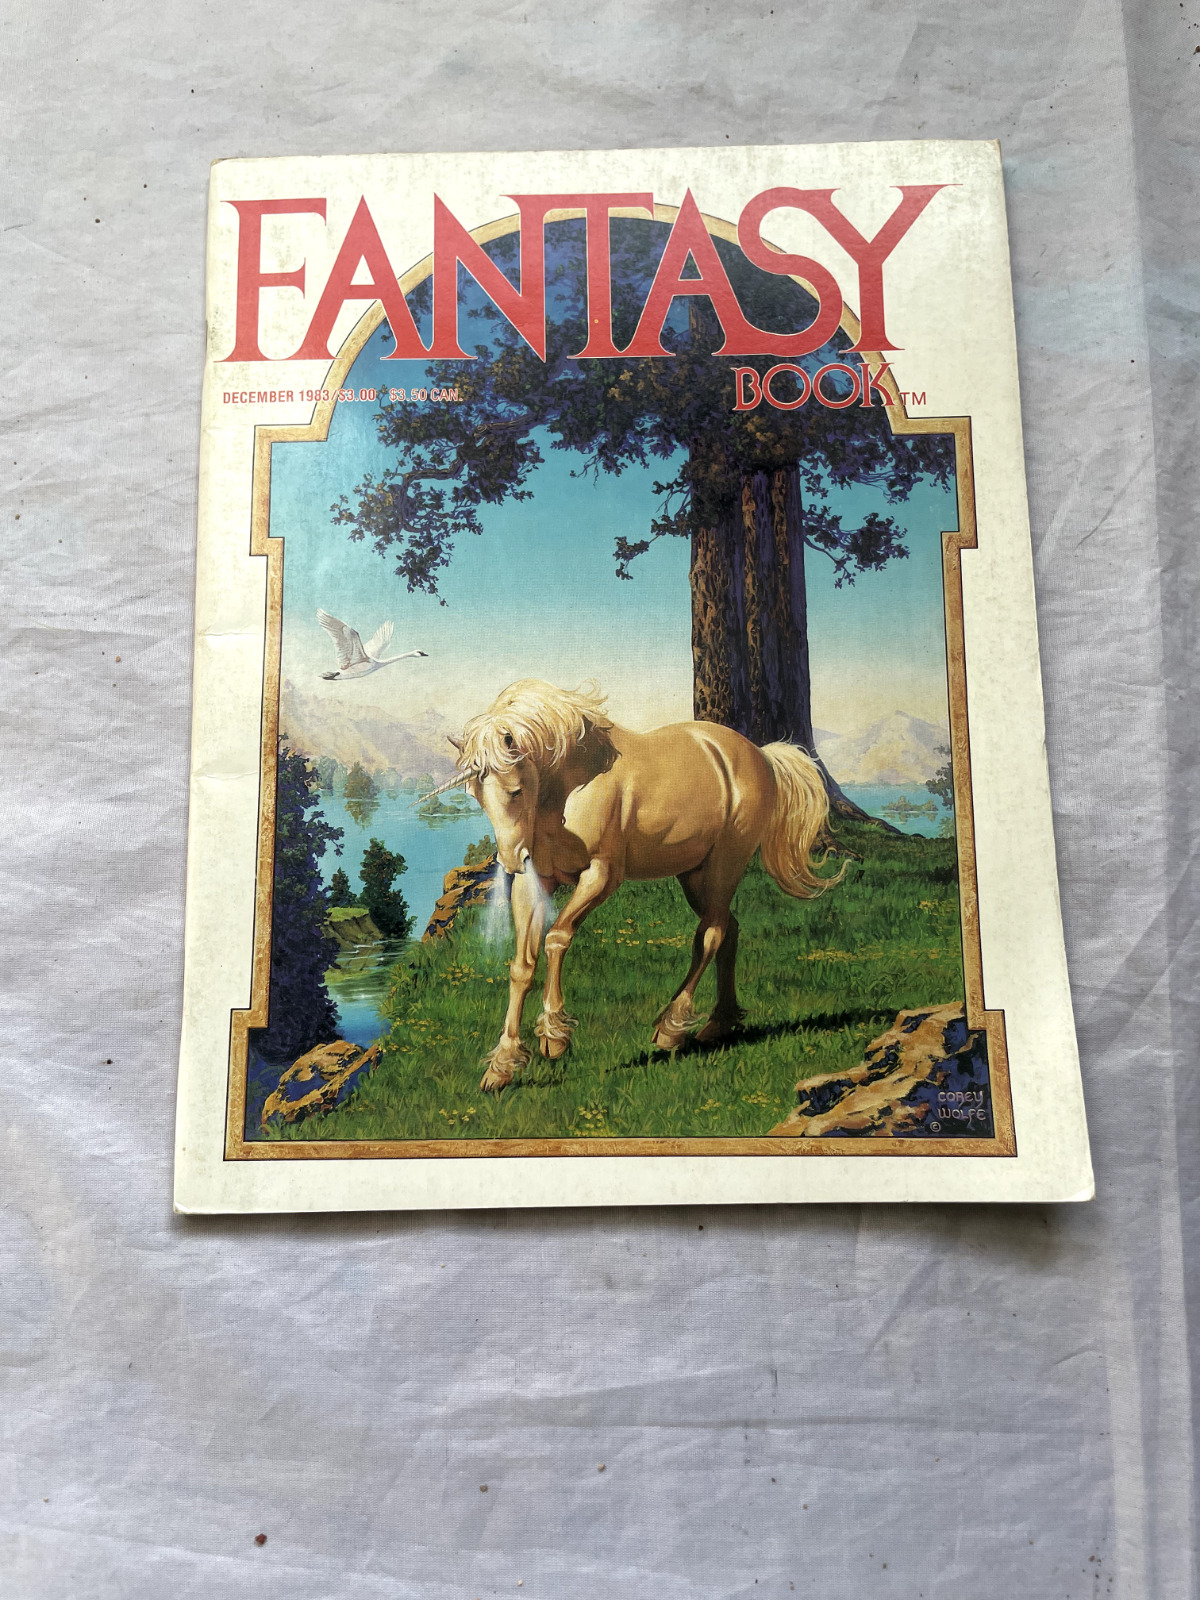 Fantasy Book Volume 2, No. 4 - December 1983